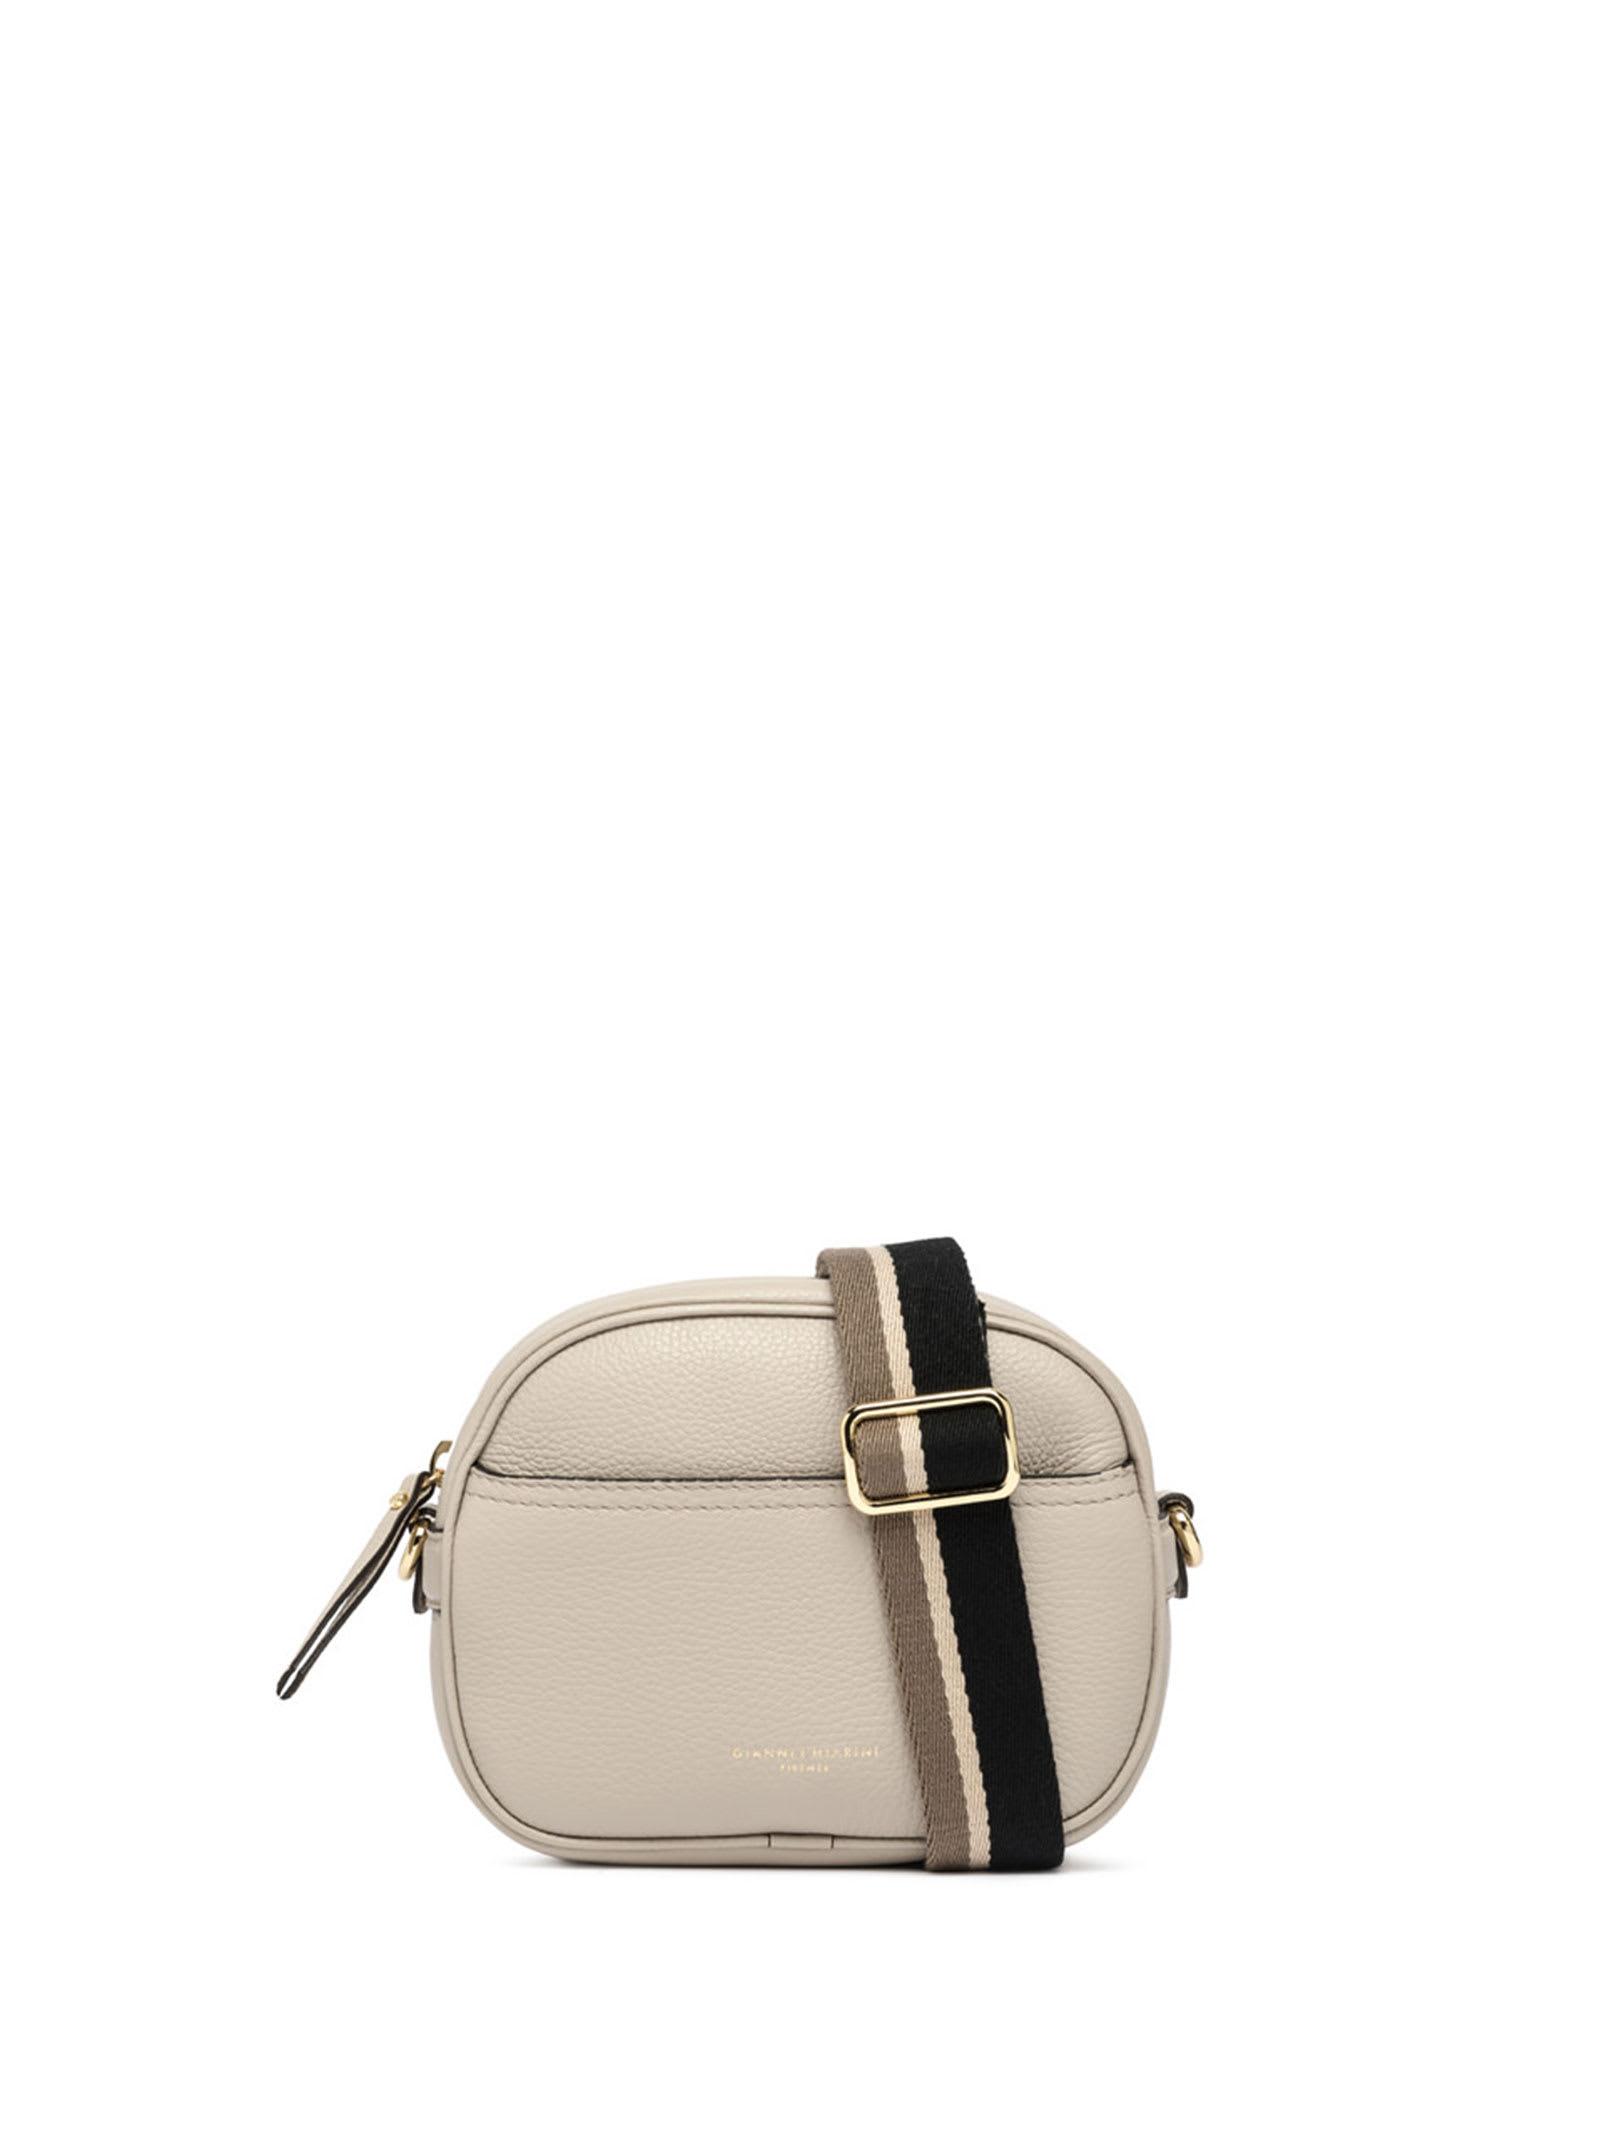 Gianni Chiarini Nina Shoulder Bag In Leather | Lyst